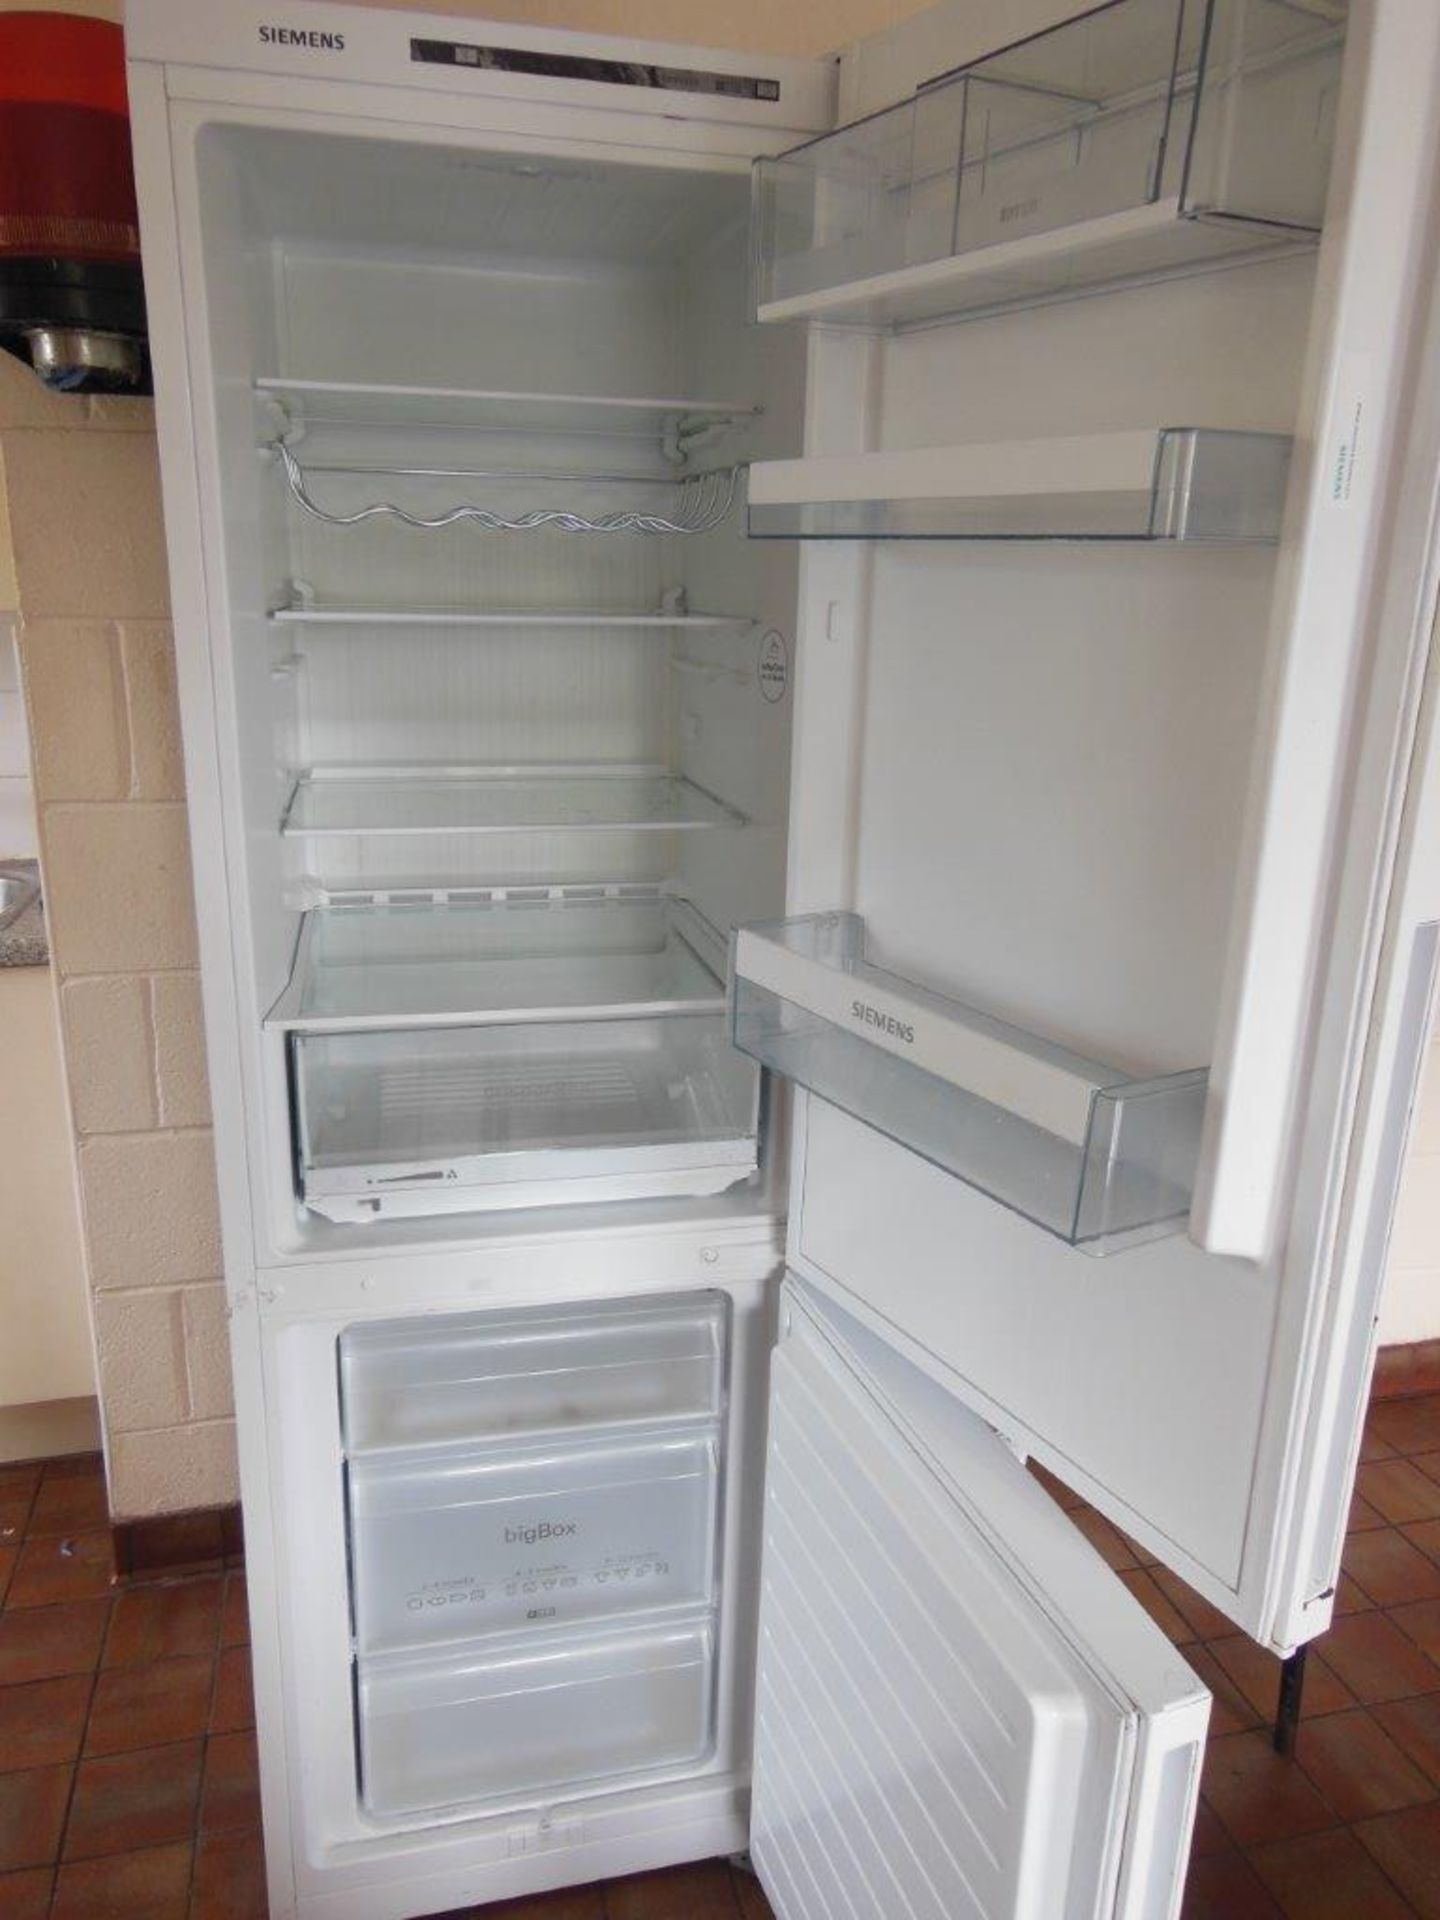 SIEMENS upright fridge freezer - Image 2 of 2